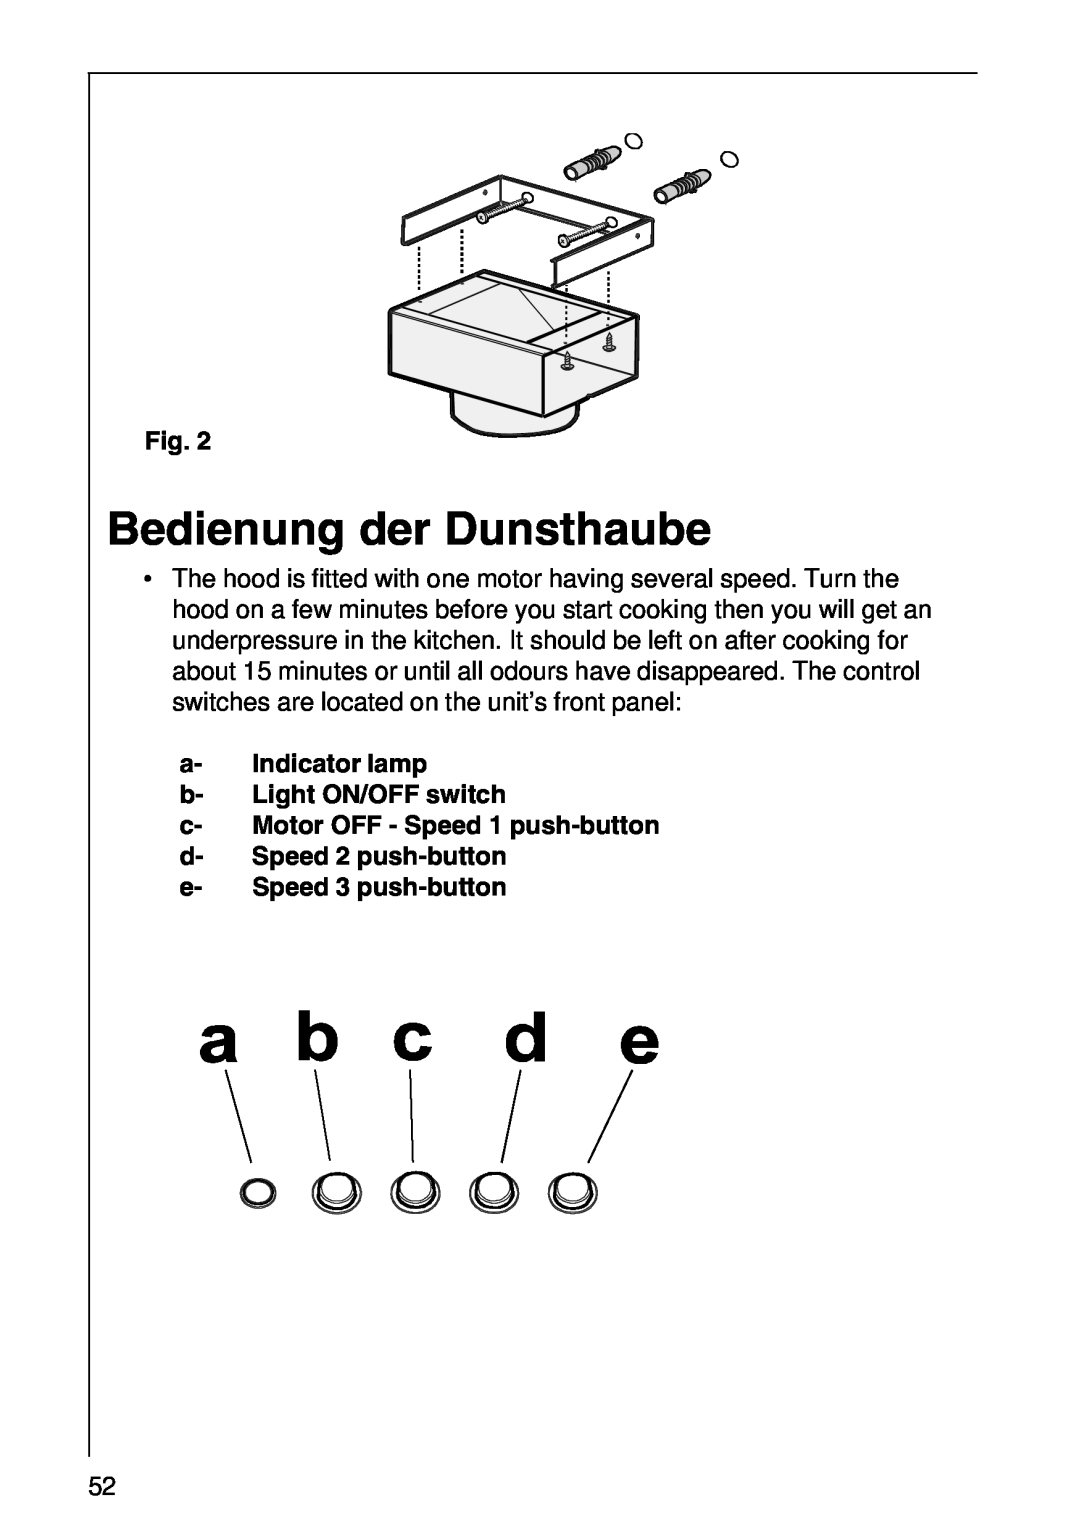 AEG 2460 D, 2490 D Bedienung der Dunsthaube, a- Indicator lamp b- Light ON/OFF switch, c- Motor OFF - Speed 1 push-button 